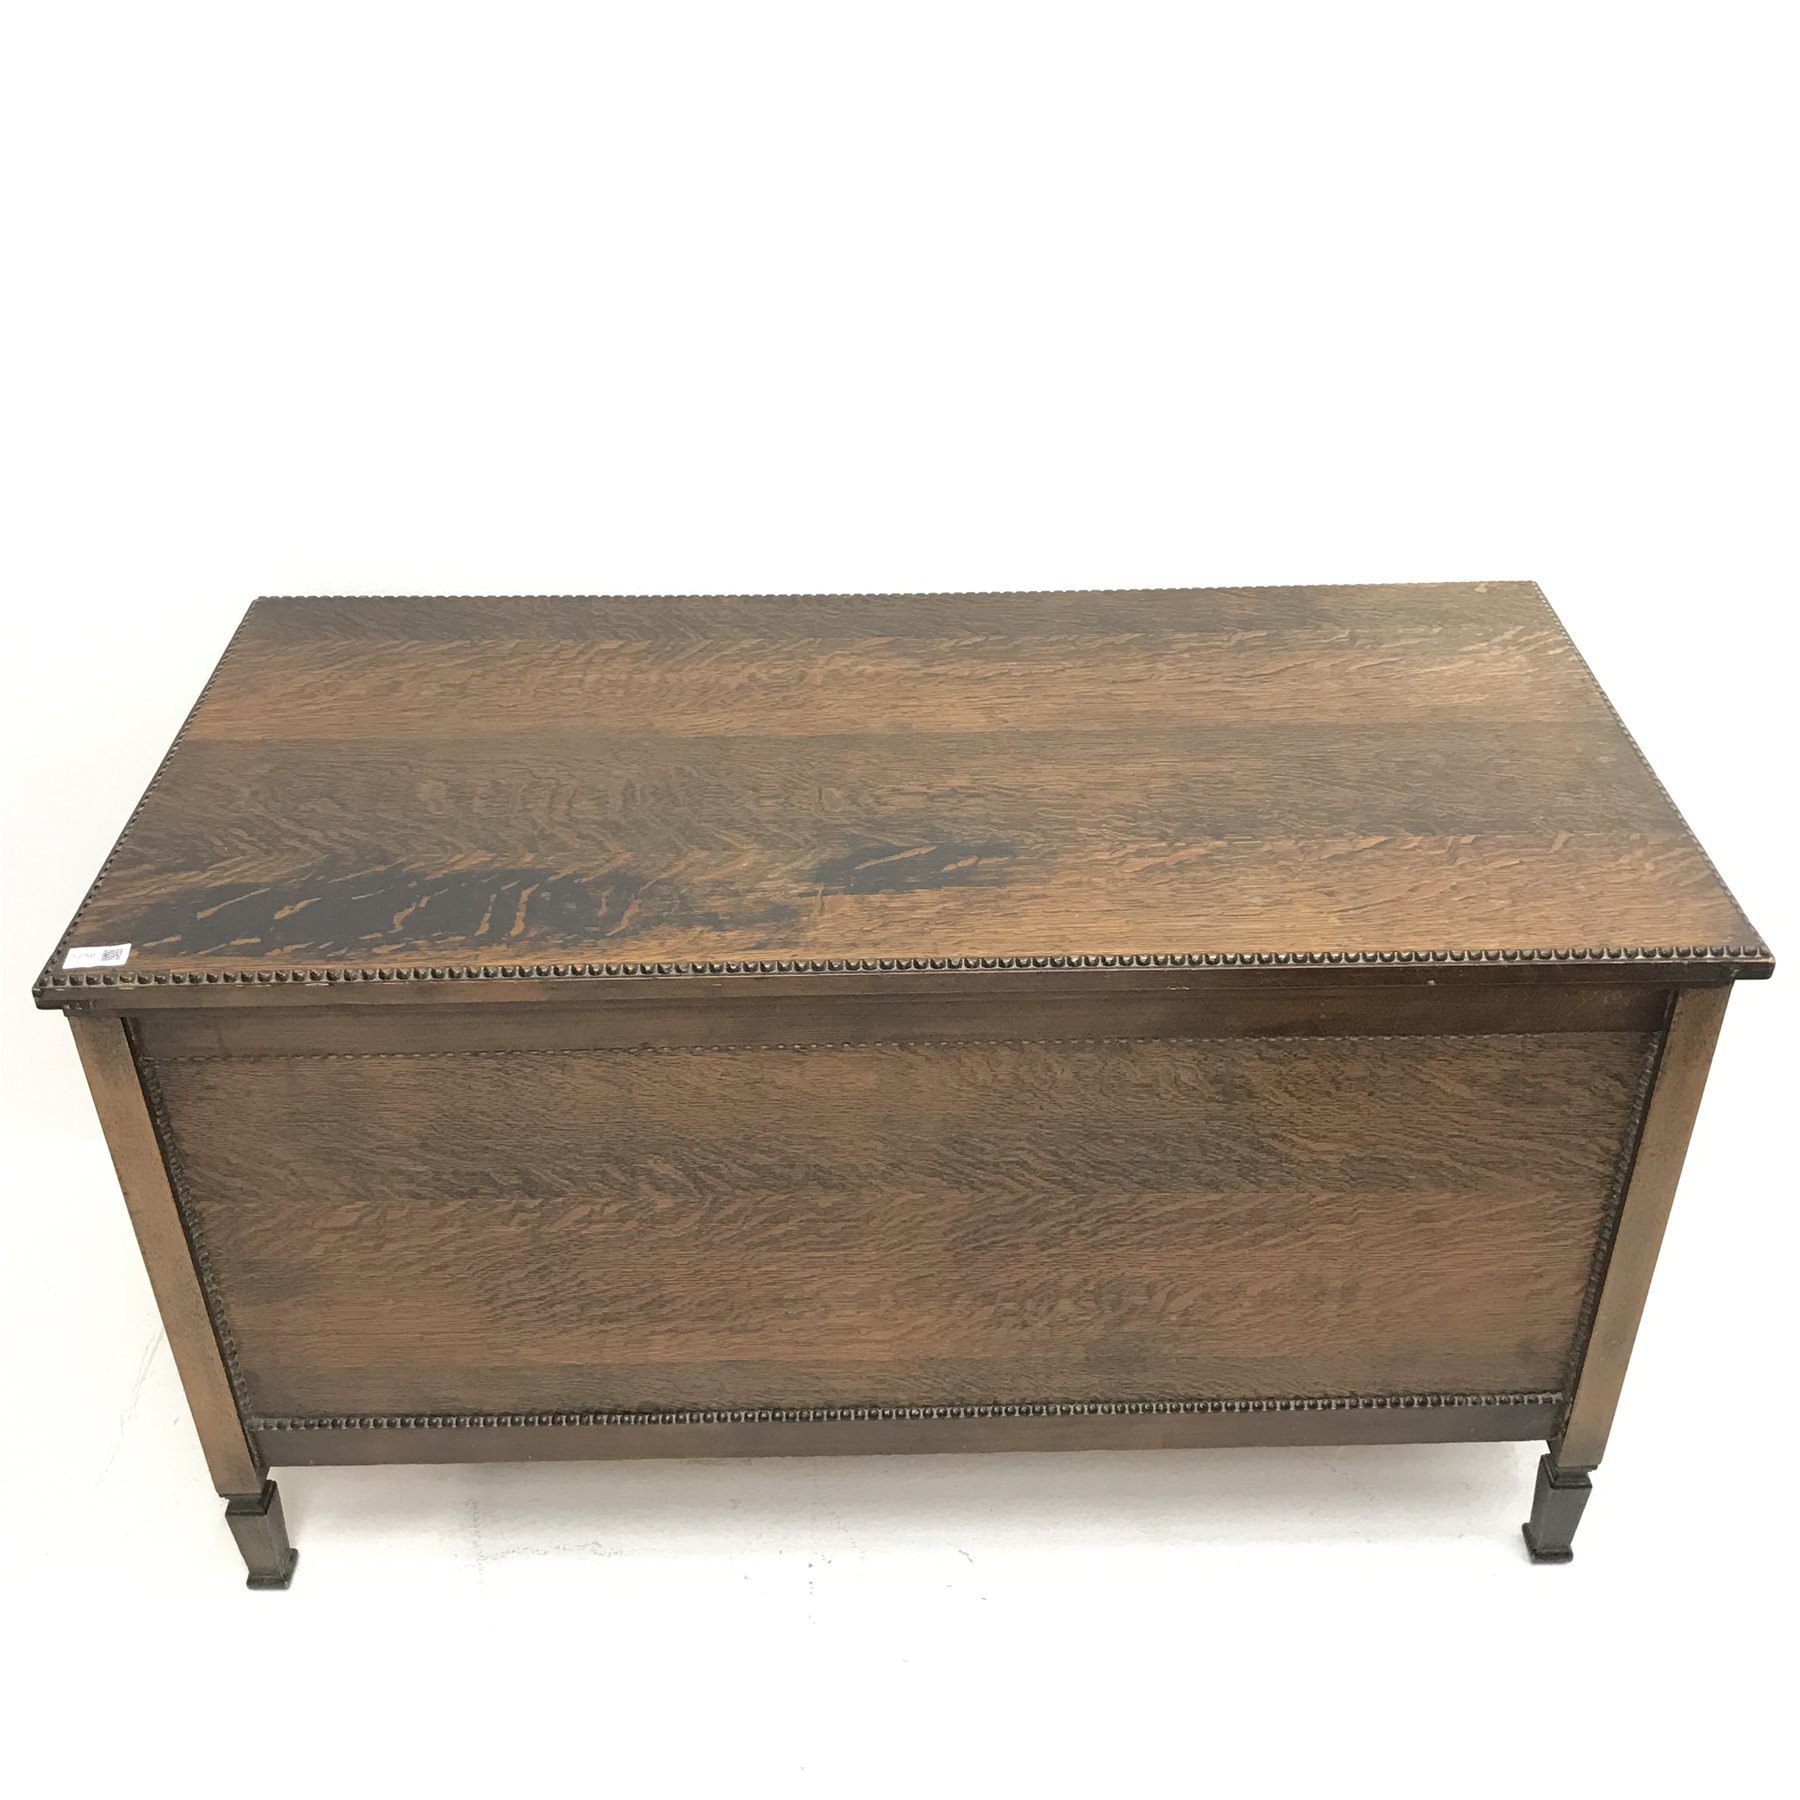 Early 20th century oak blanket box, single hinged lid, W110cm, H63cm, D55cm - Image 2 of 5